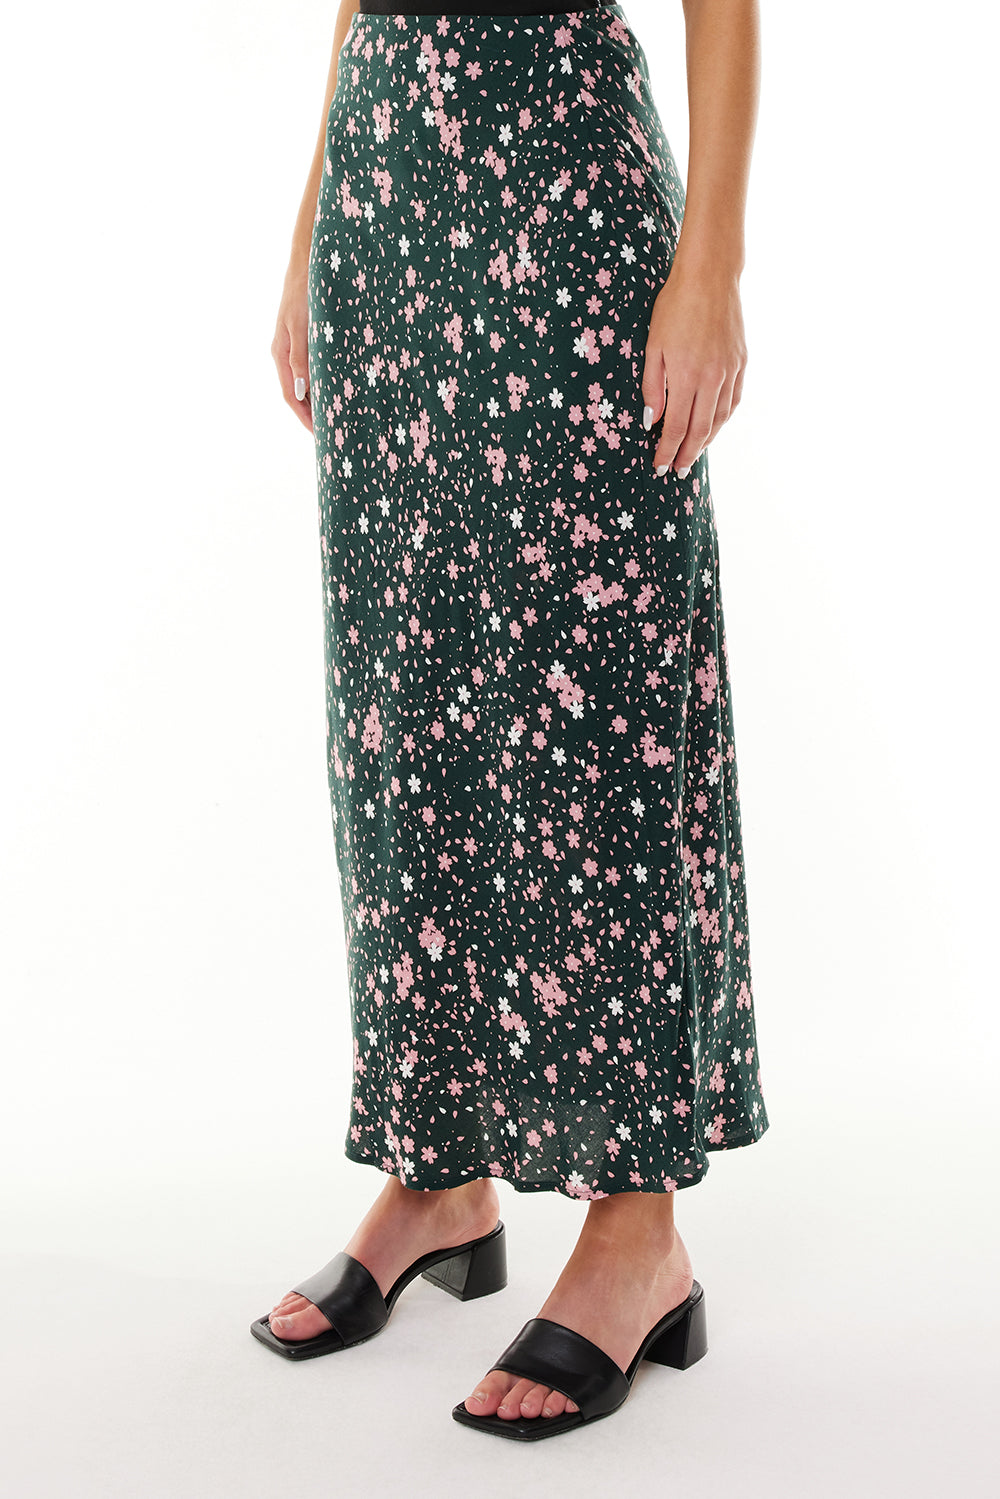 HUFFER // Venice Floral Lila Midi Skirt GREEN